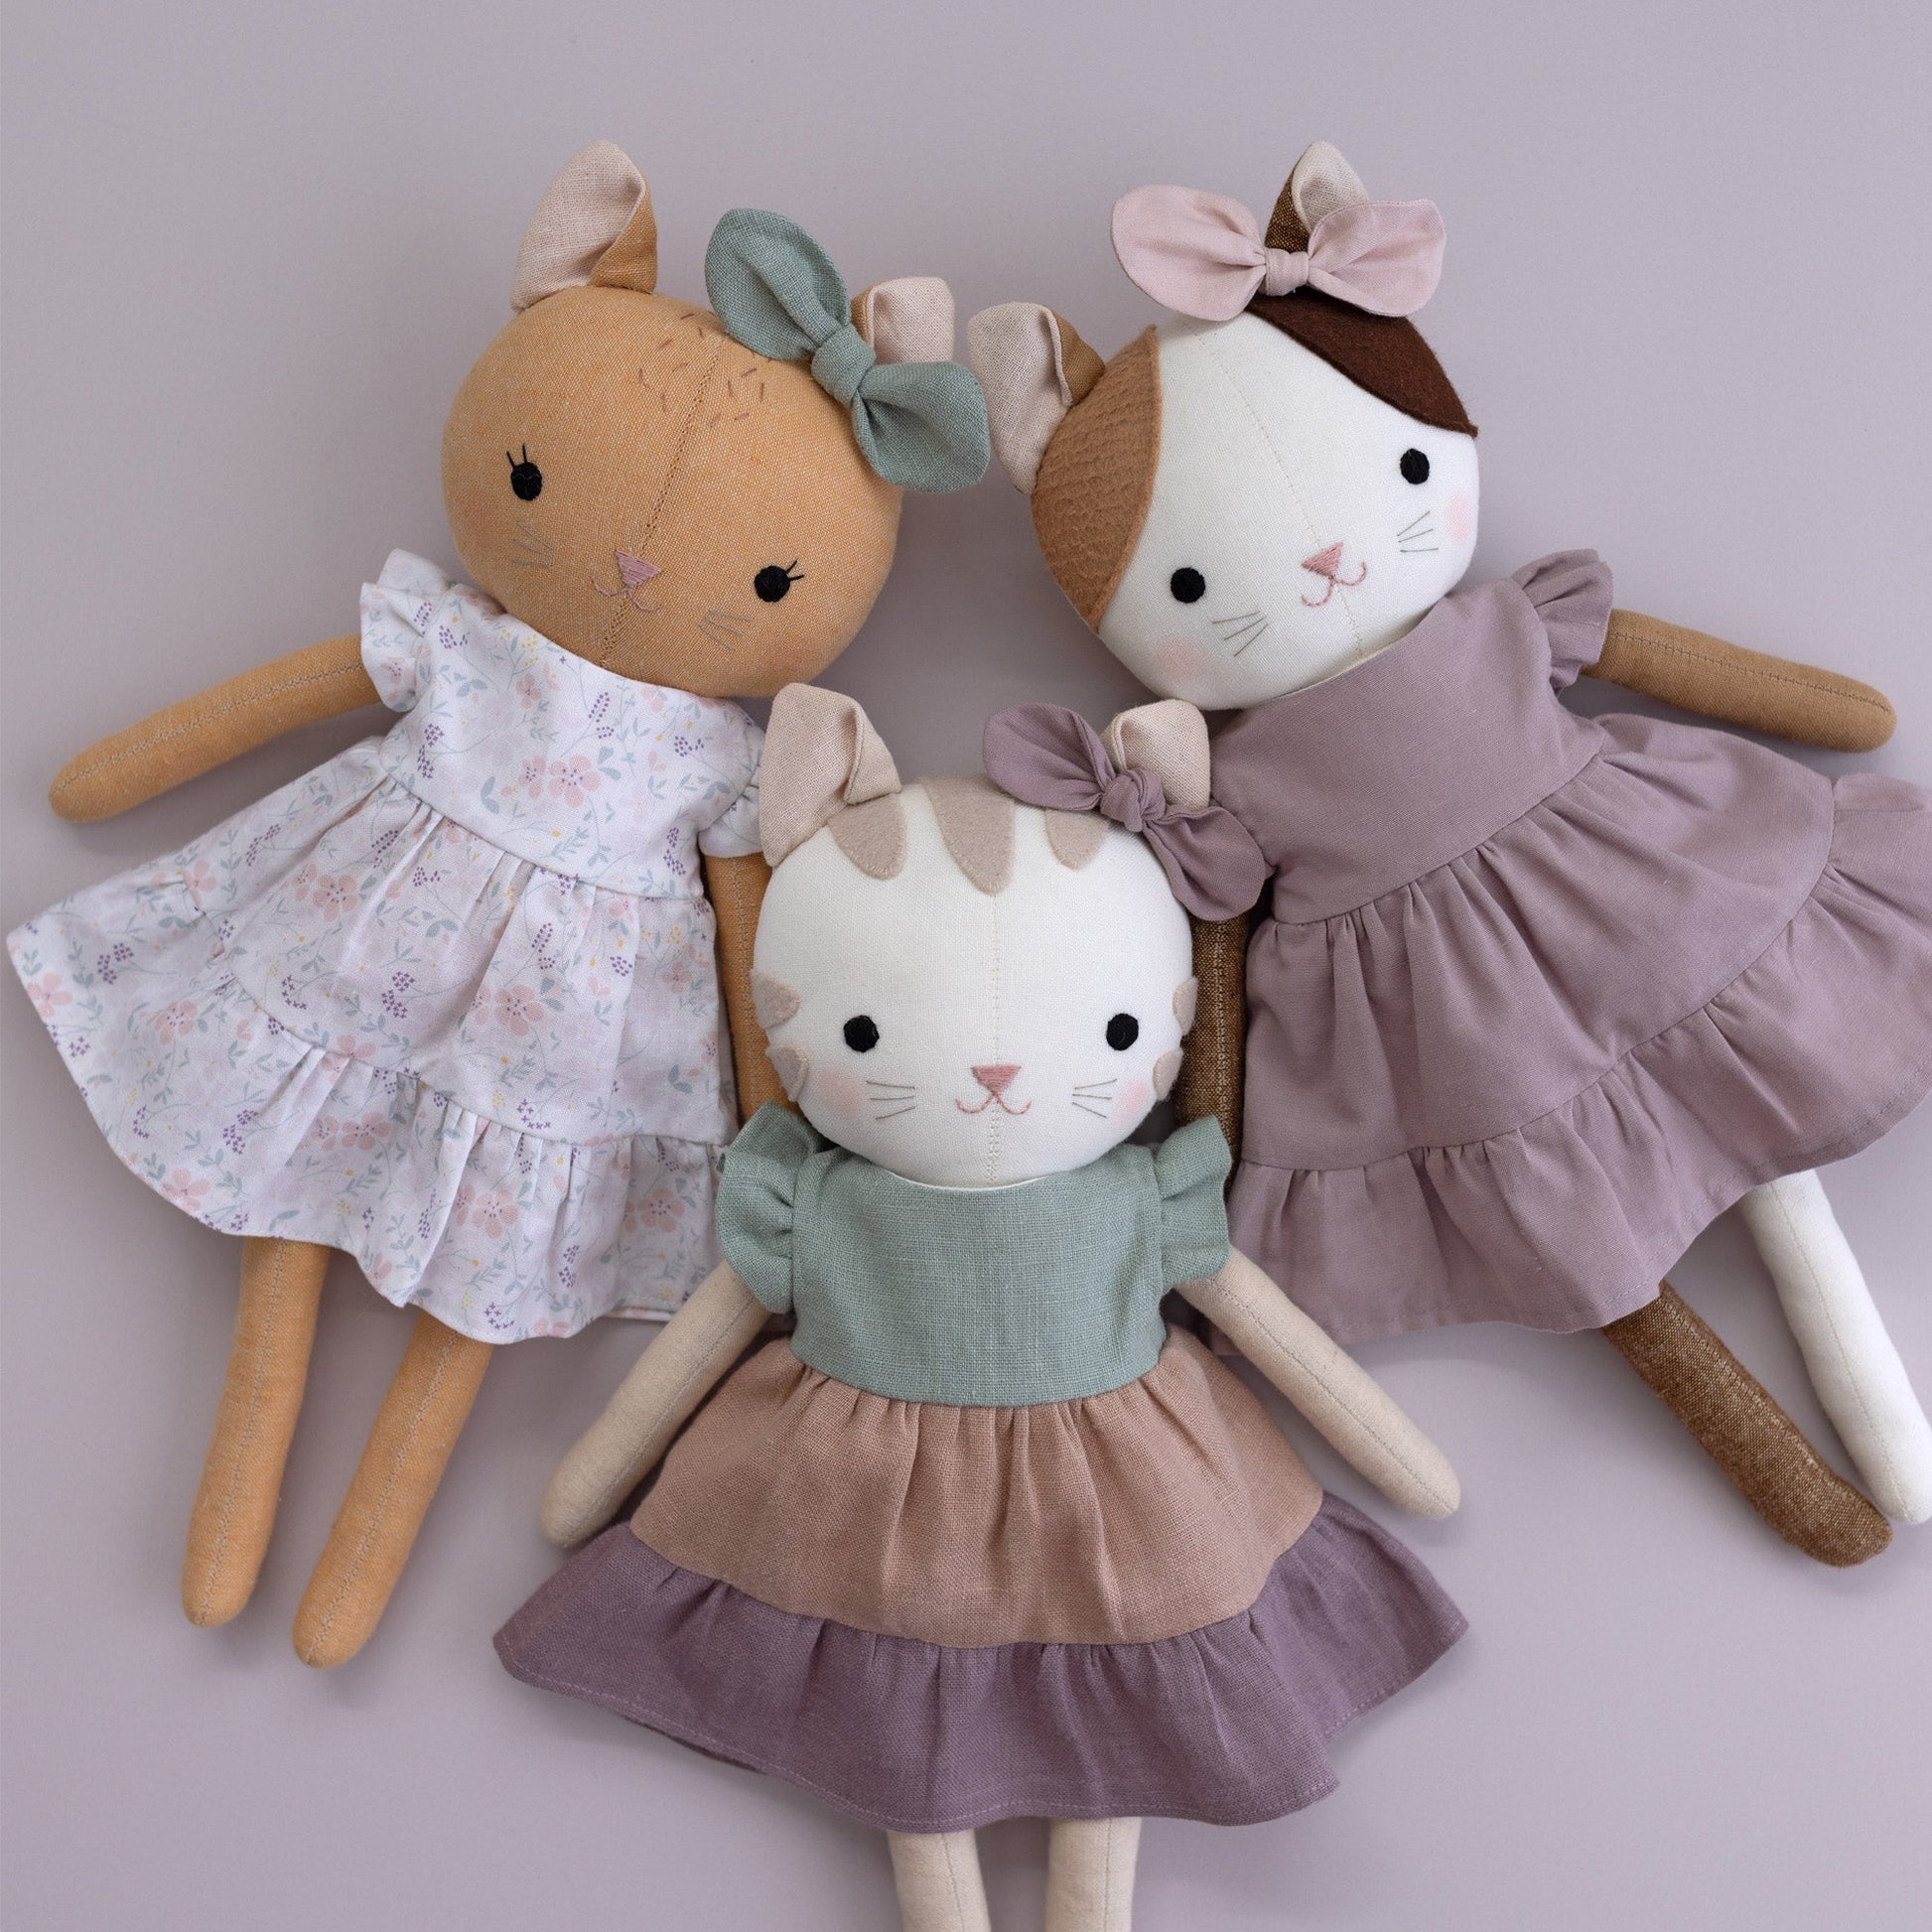 DIY Doll Kit Make Your Own Interior Doll Sewing Kit Pattern kitty 